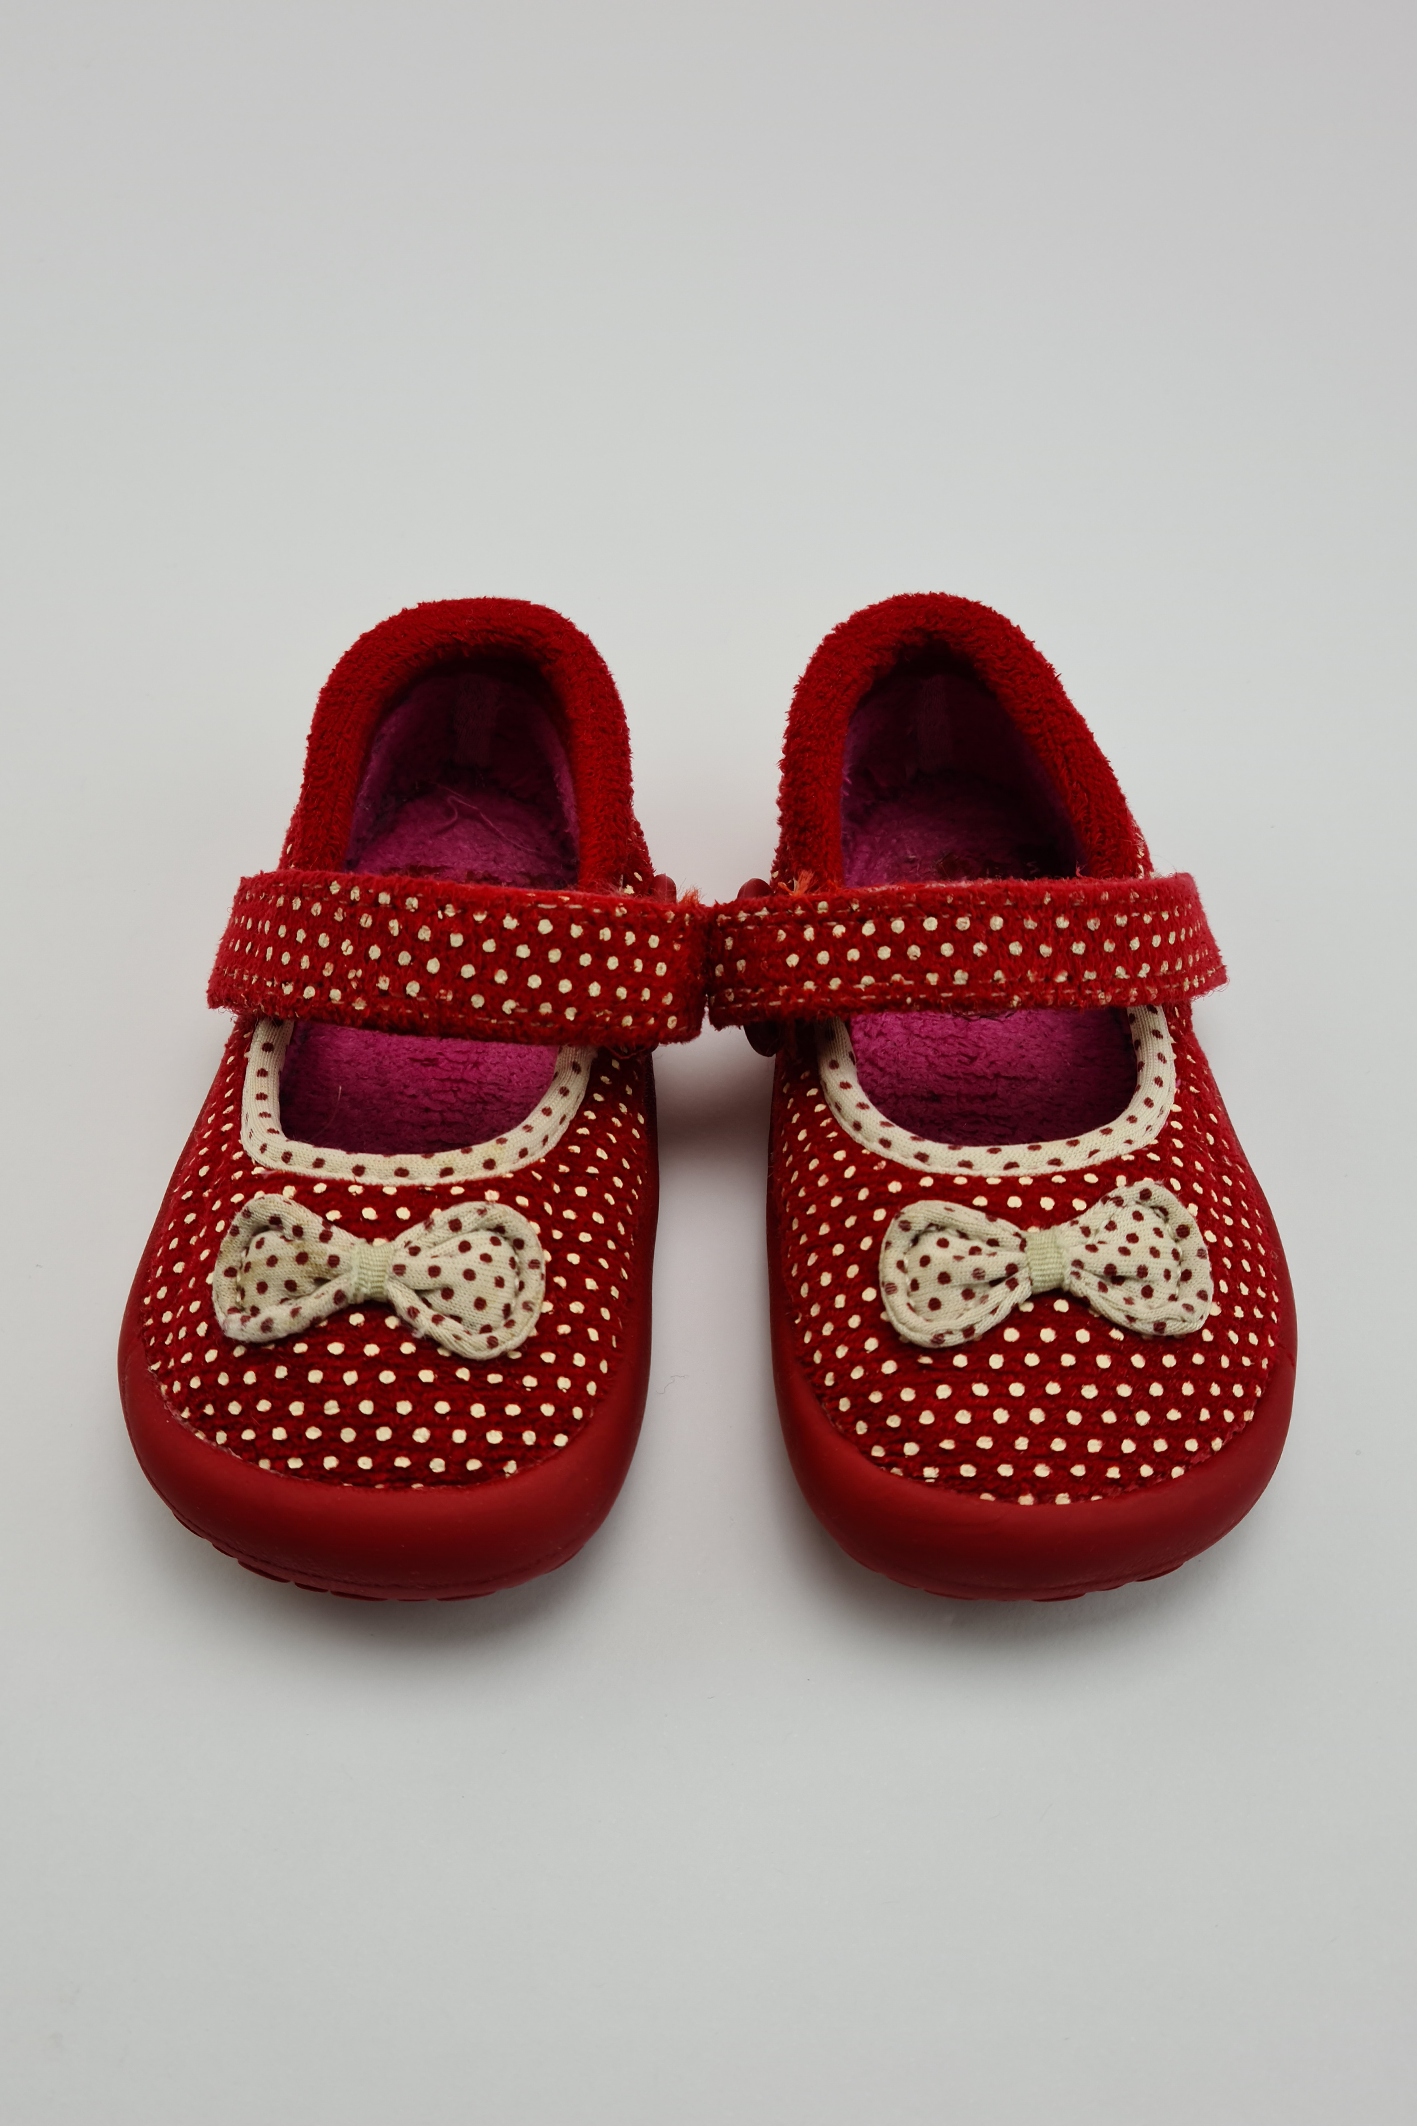 Größe 4F – Rote Mary Jane-Schuhe